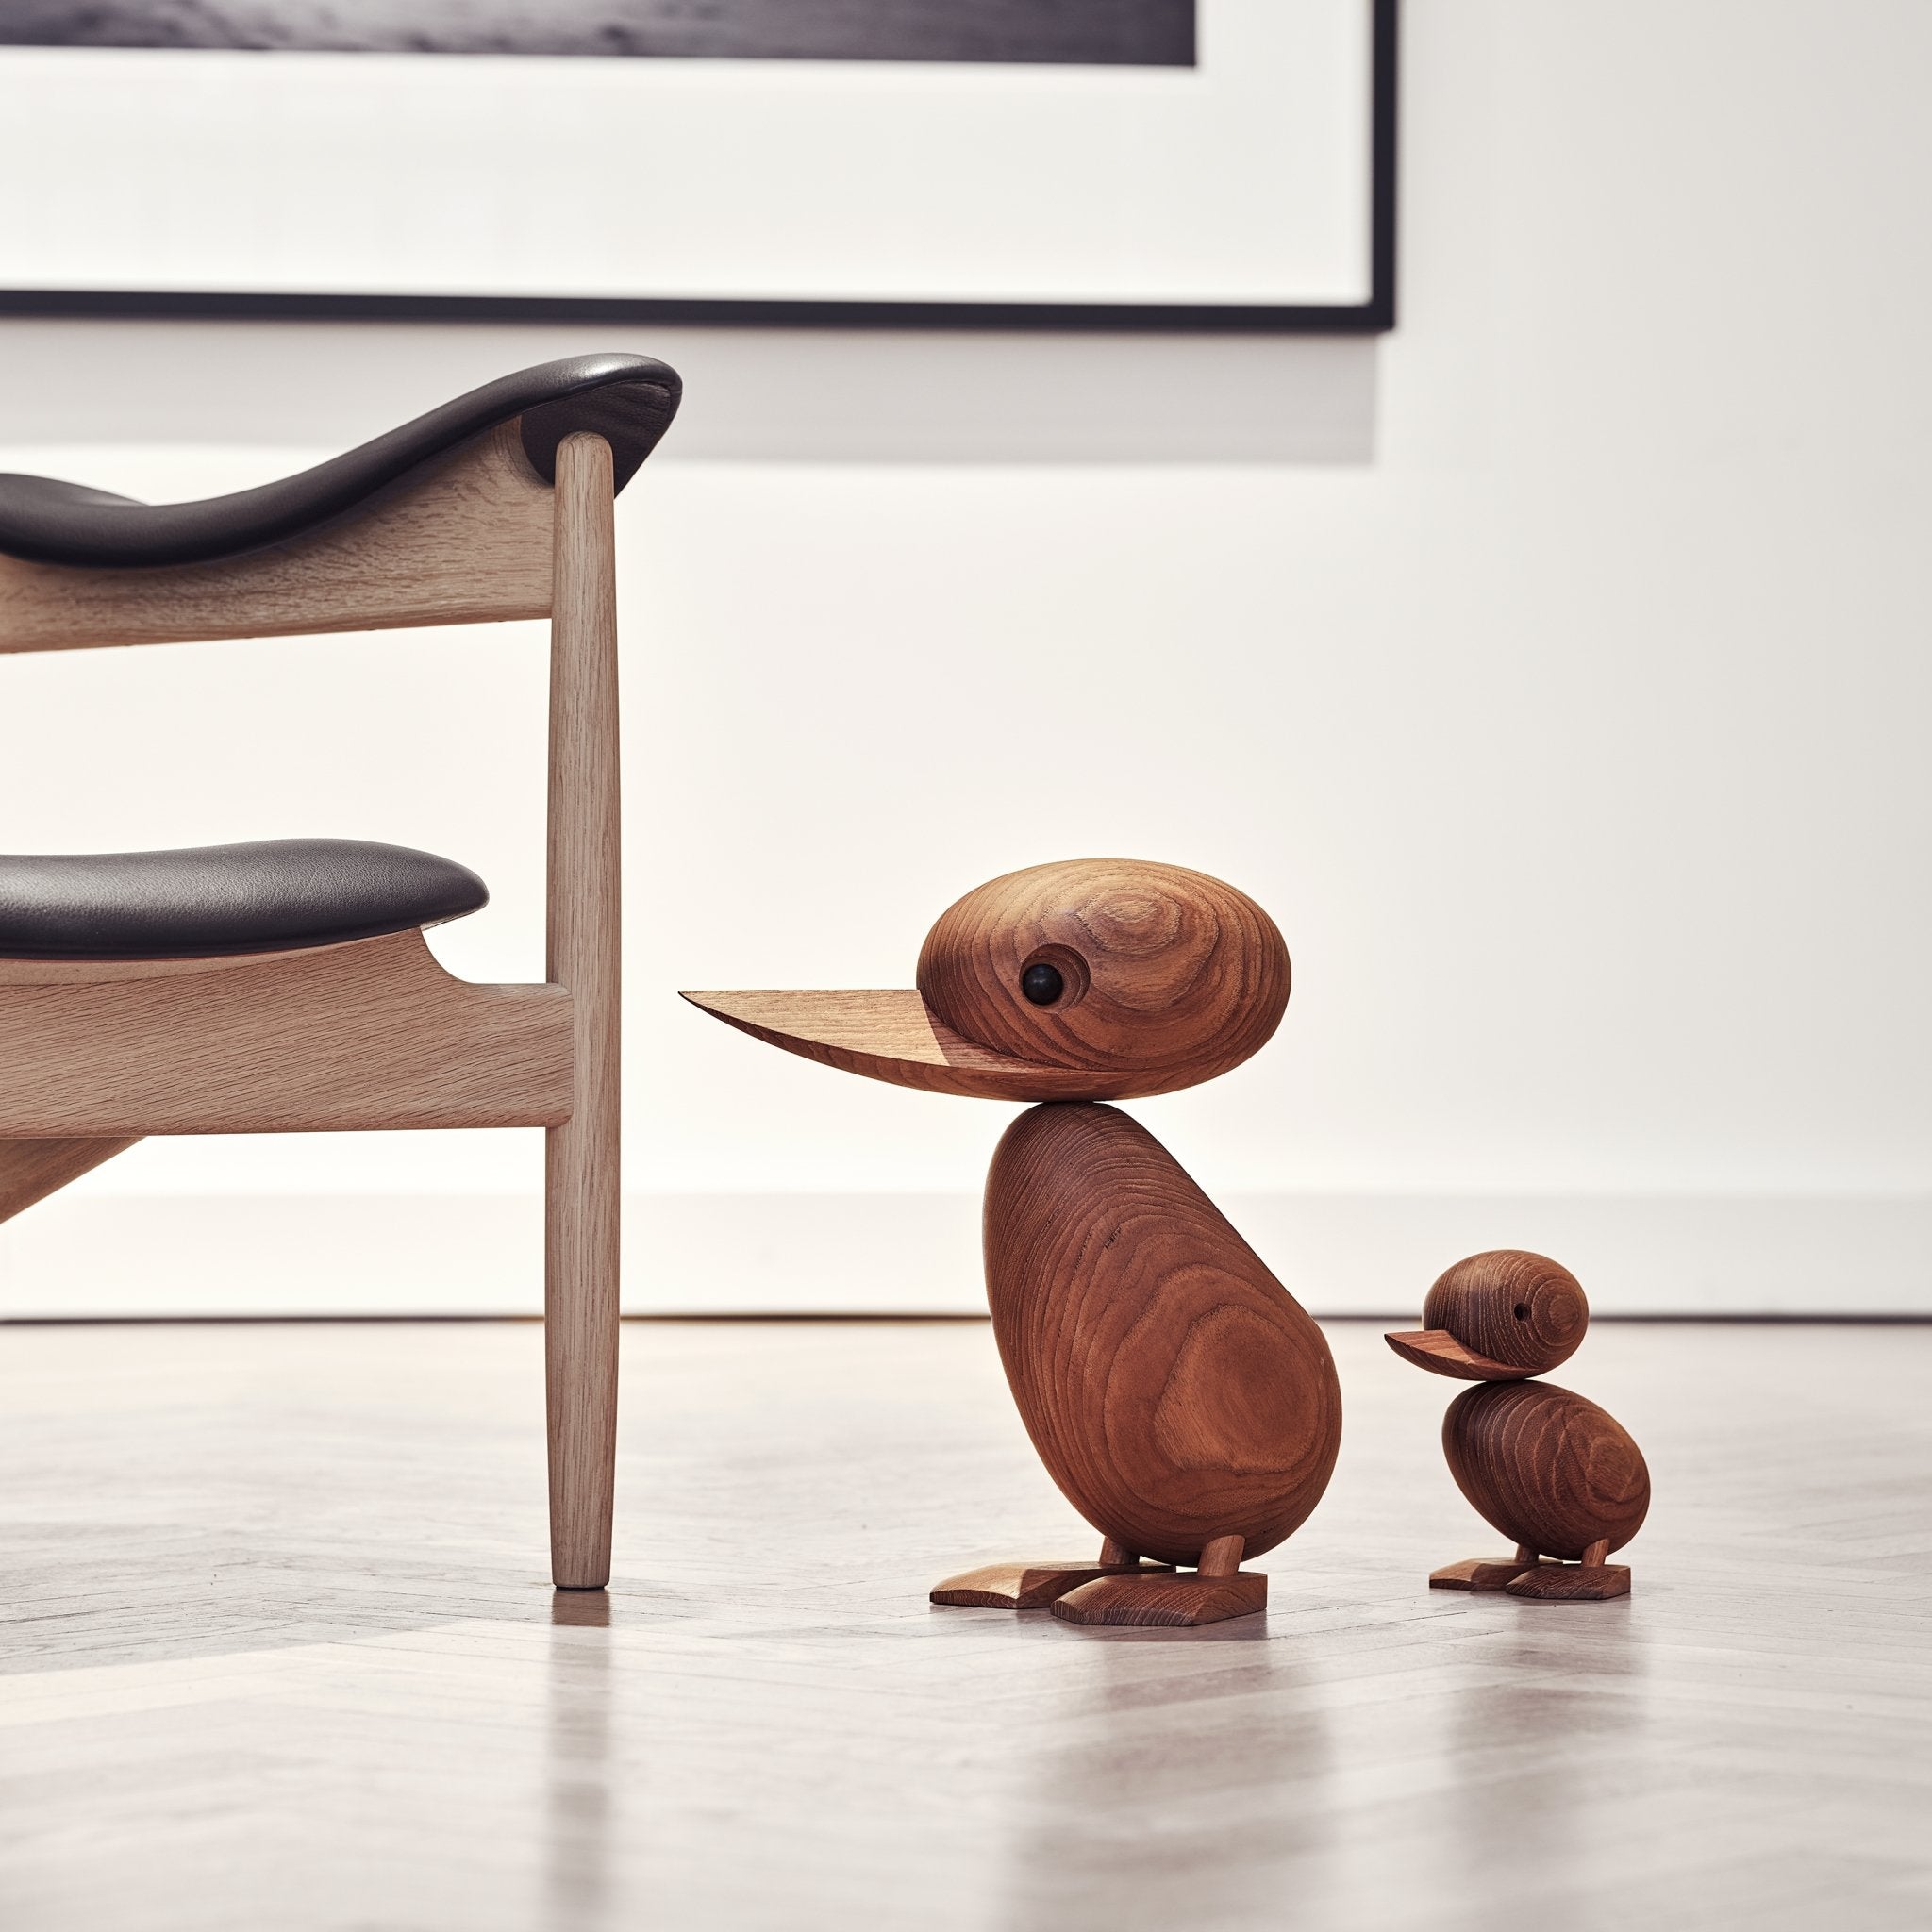 Architectmade Giant Duck and Duckling 2pcs | Panik Design